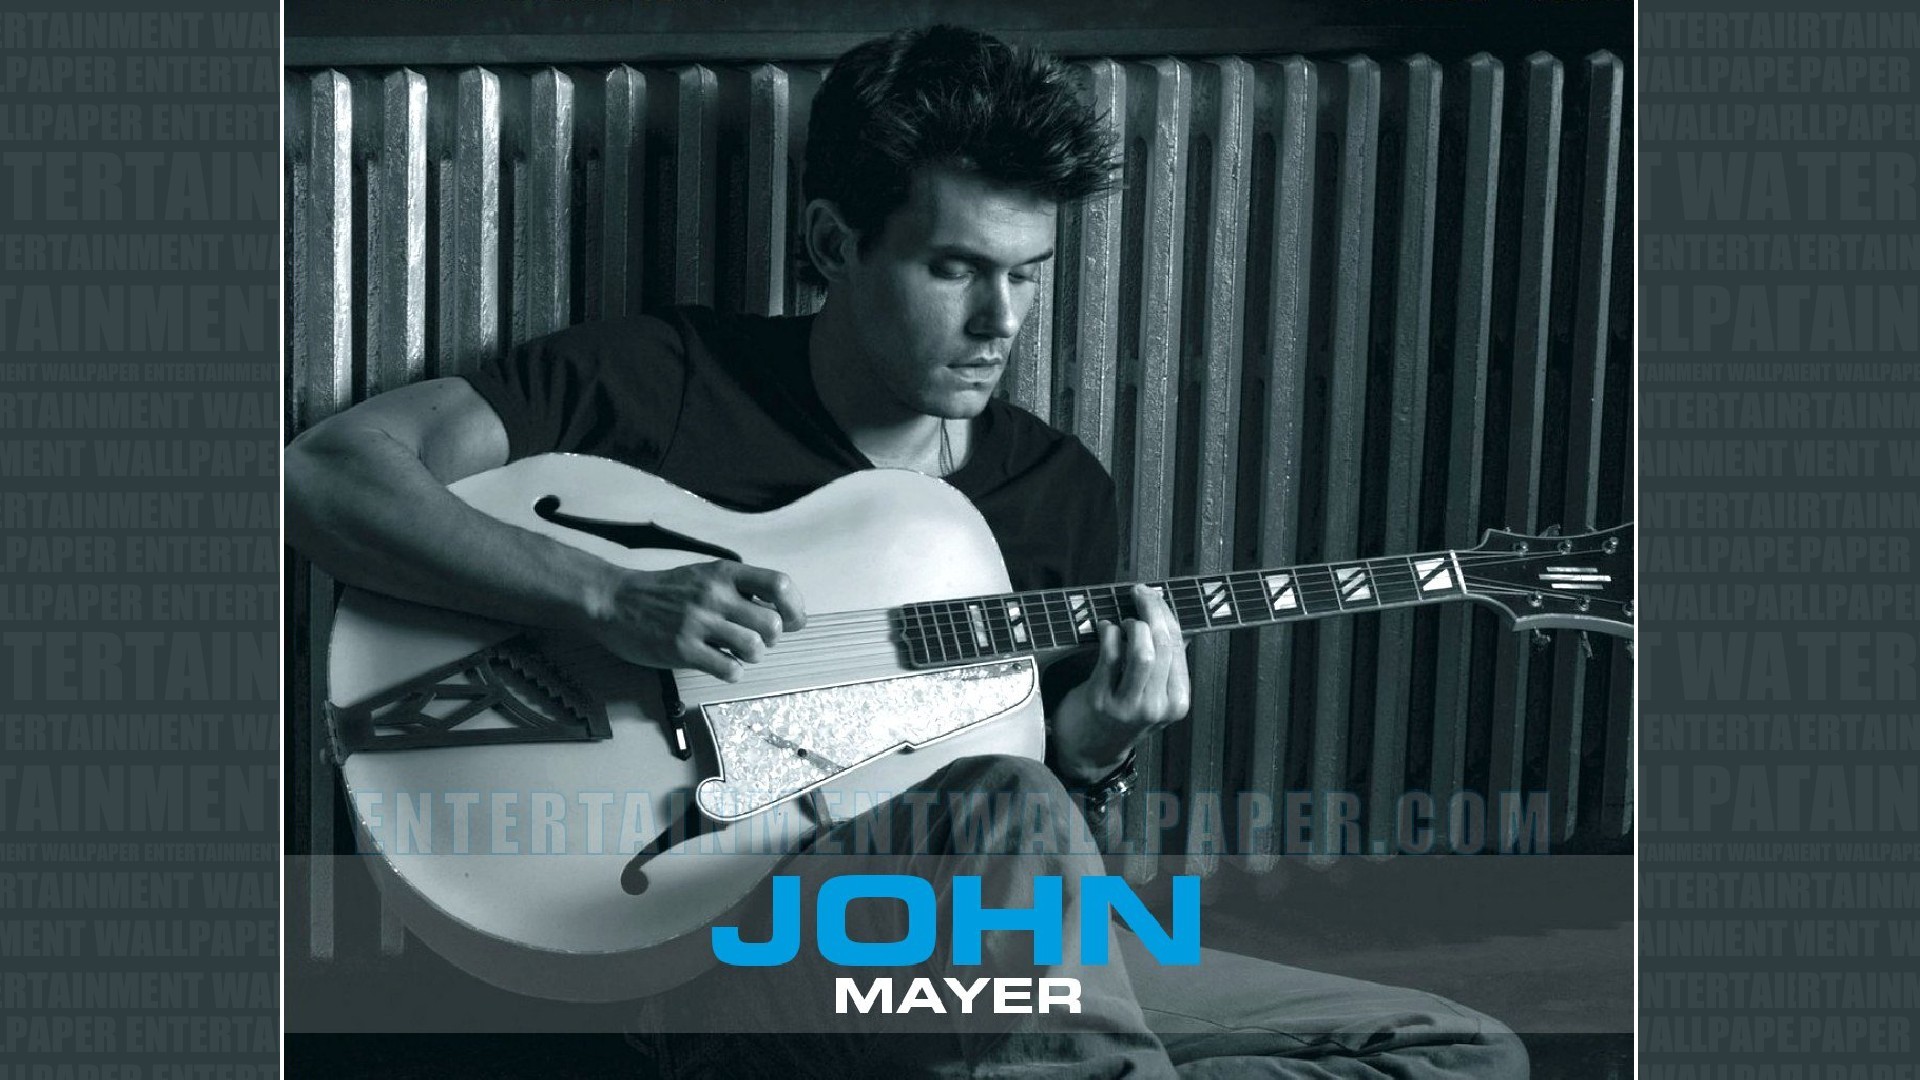 1920x1080 John Mayer Wallpaper - Original size, download now.